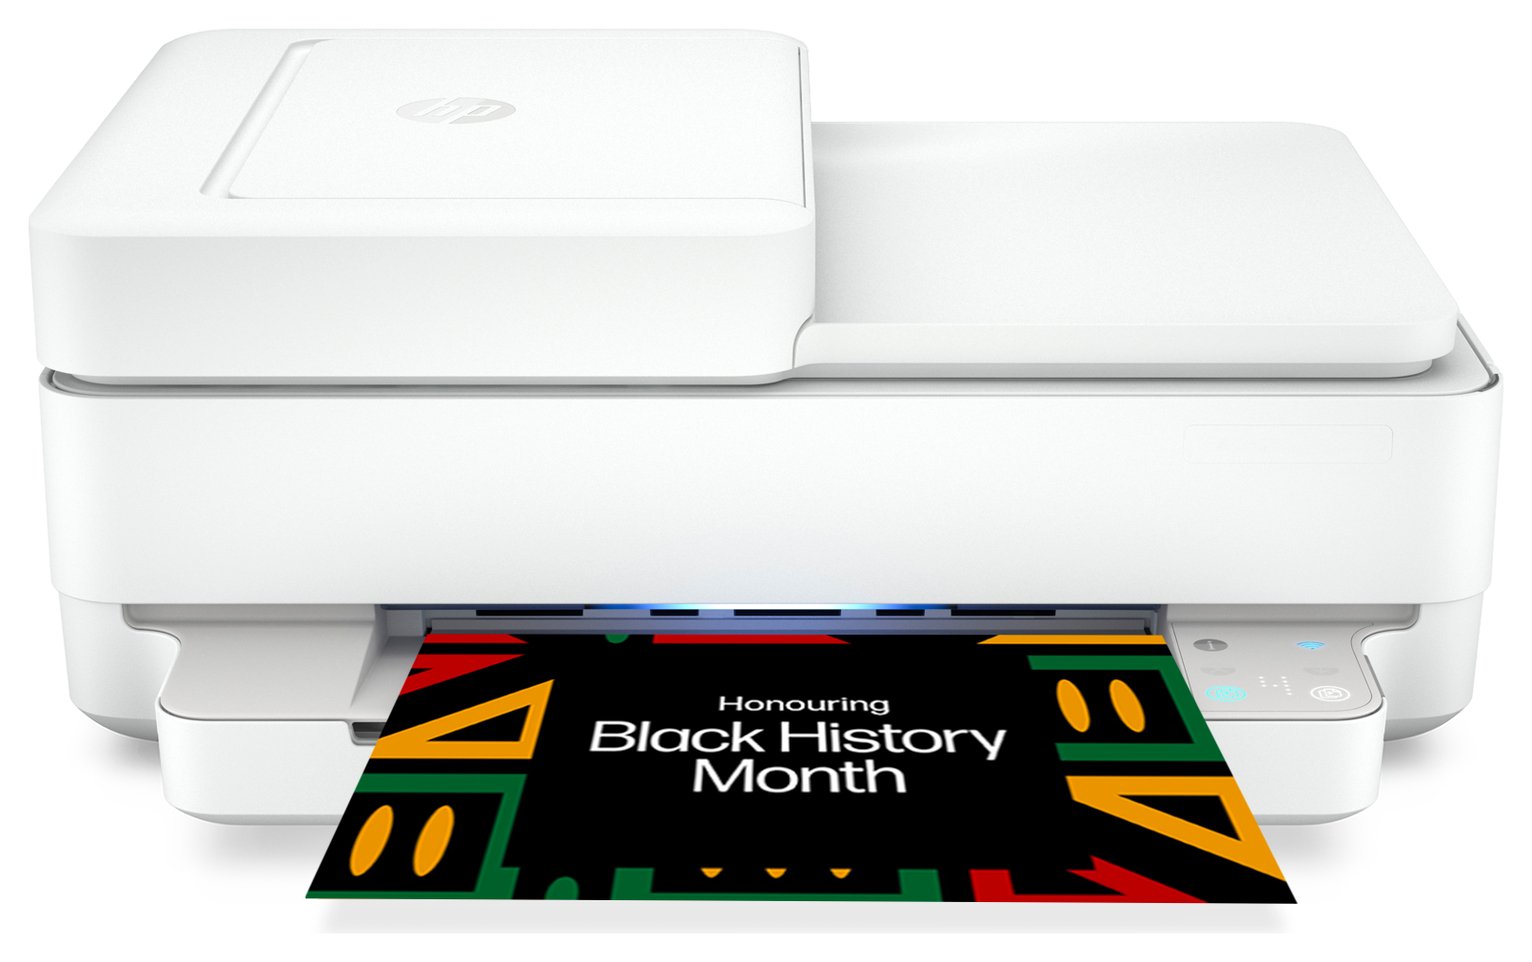 HP Plus Envy Pro 6430e Inkjet Printer & 6 Months Instant Ink